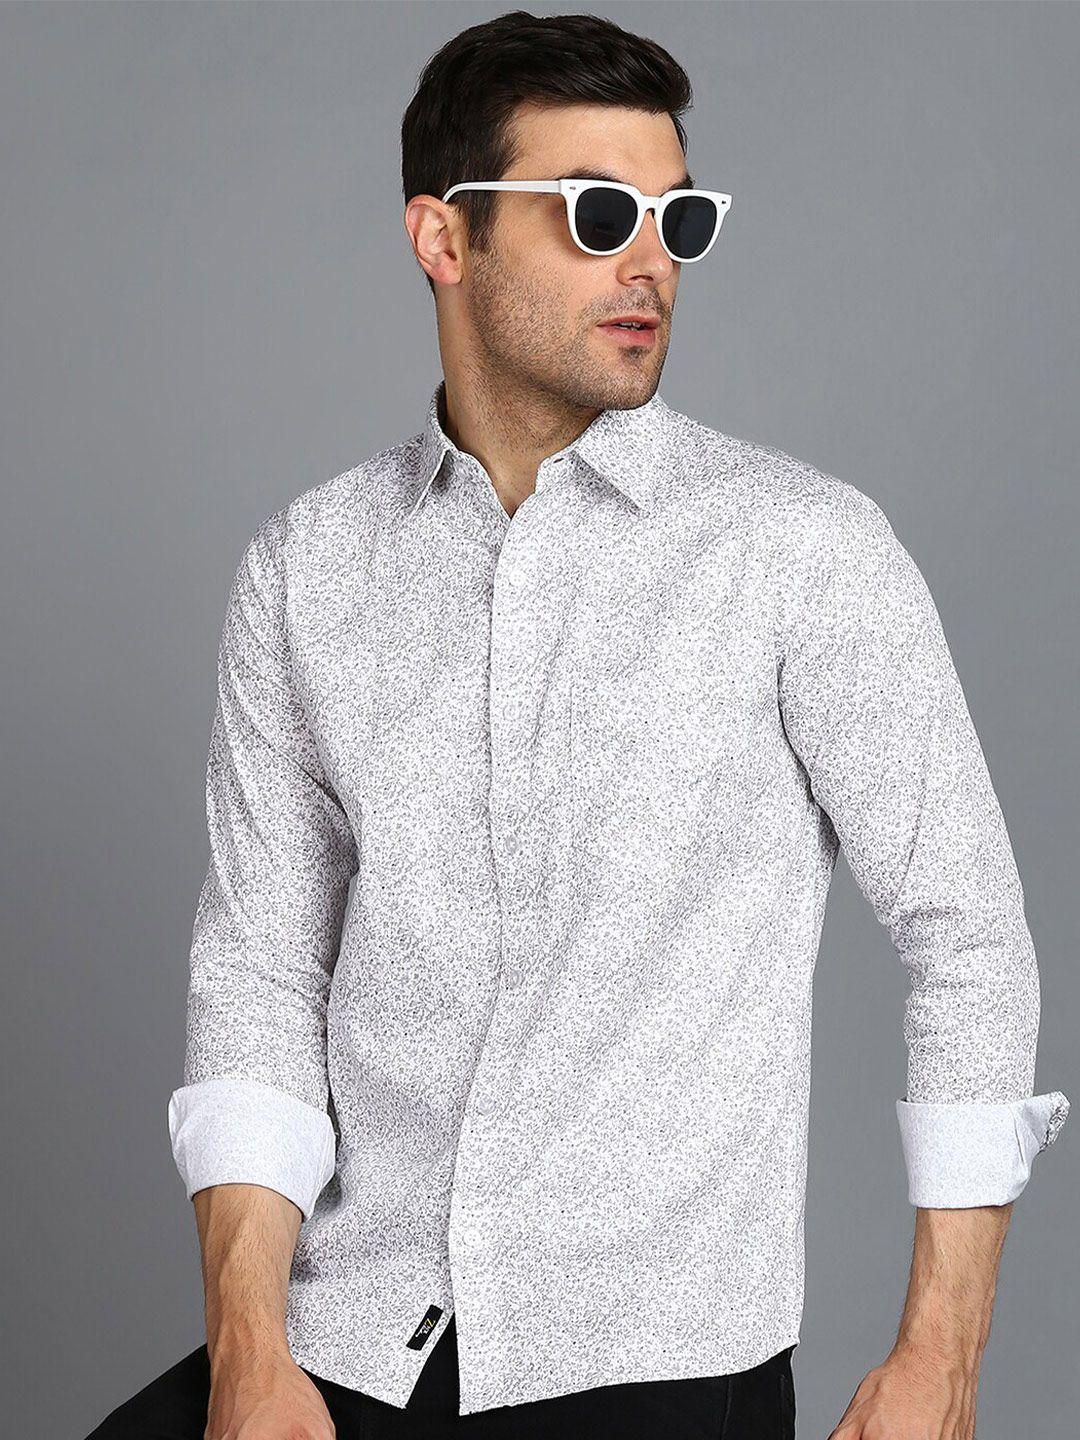 znx-clothing-men-grey-premium-floral-opaque-printed-formal-shirt